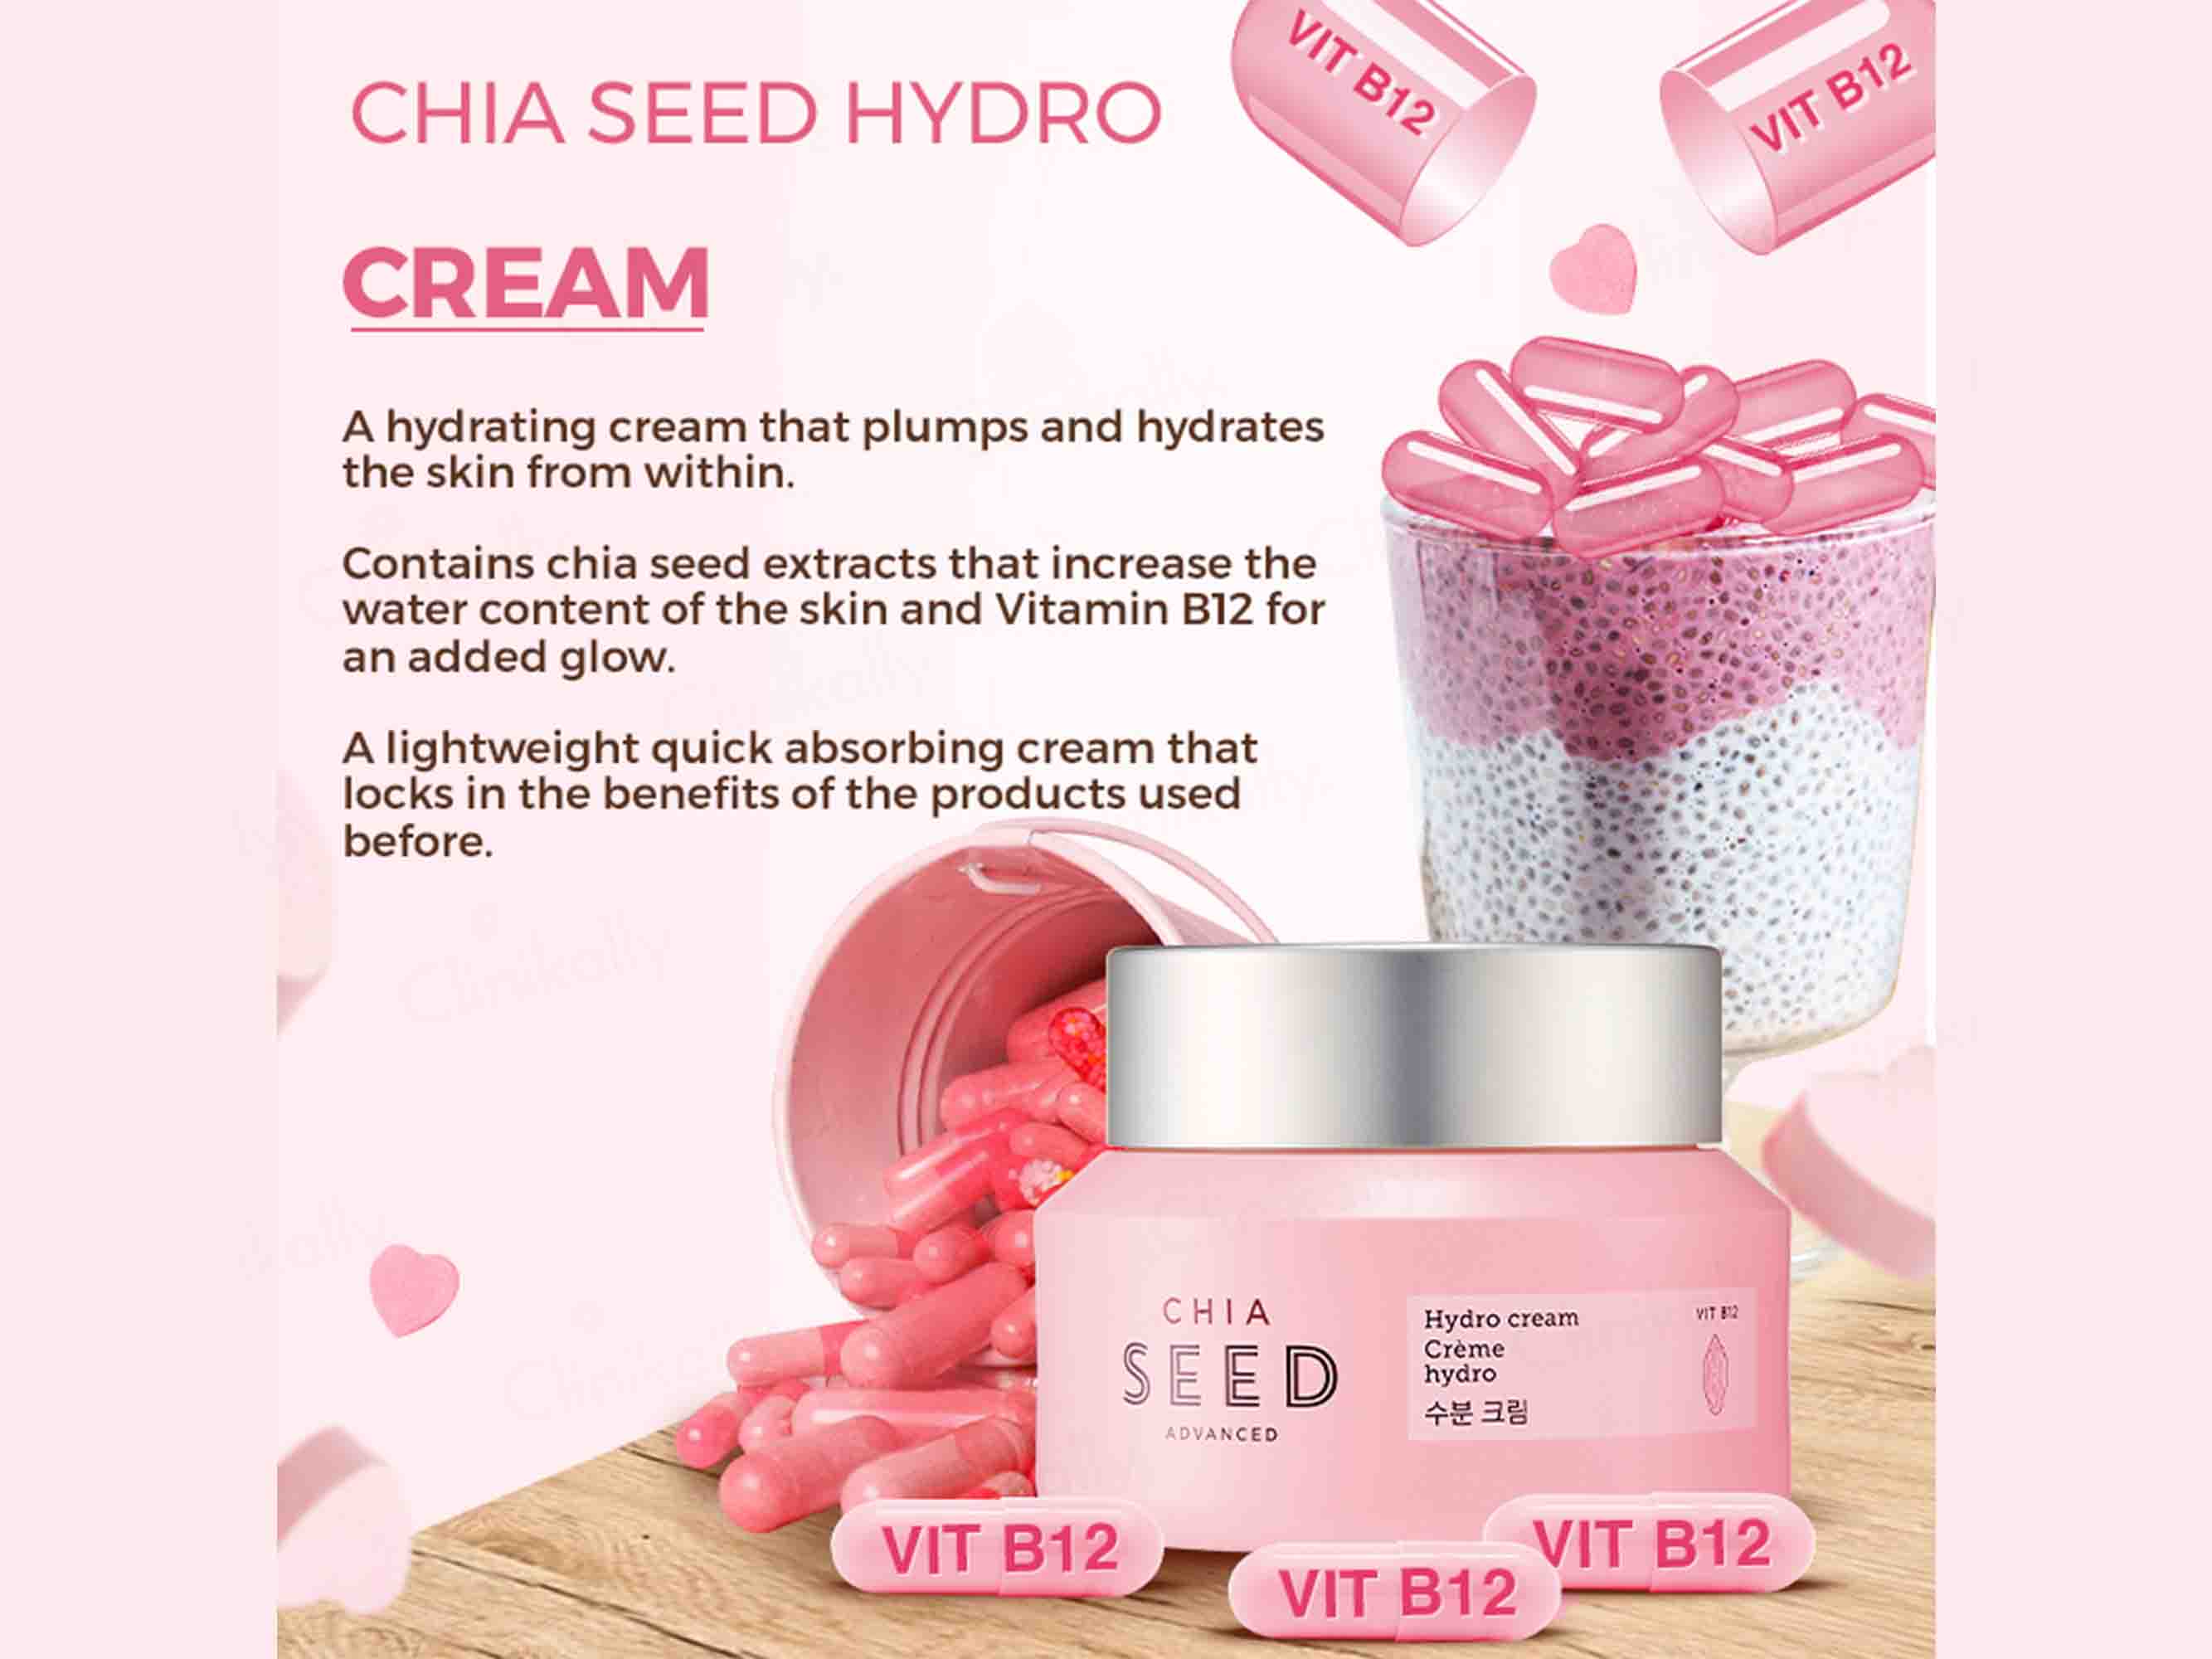 The Face Shop Chia Seed Advanced Hydro Cream